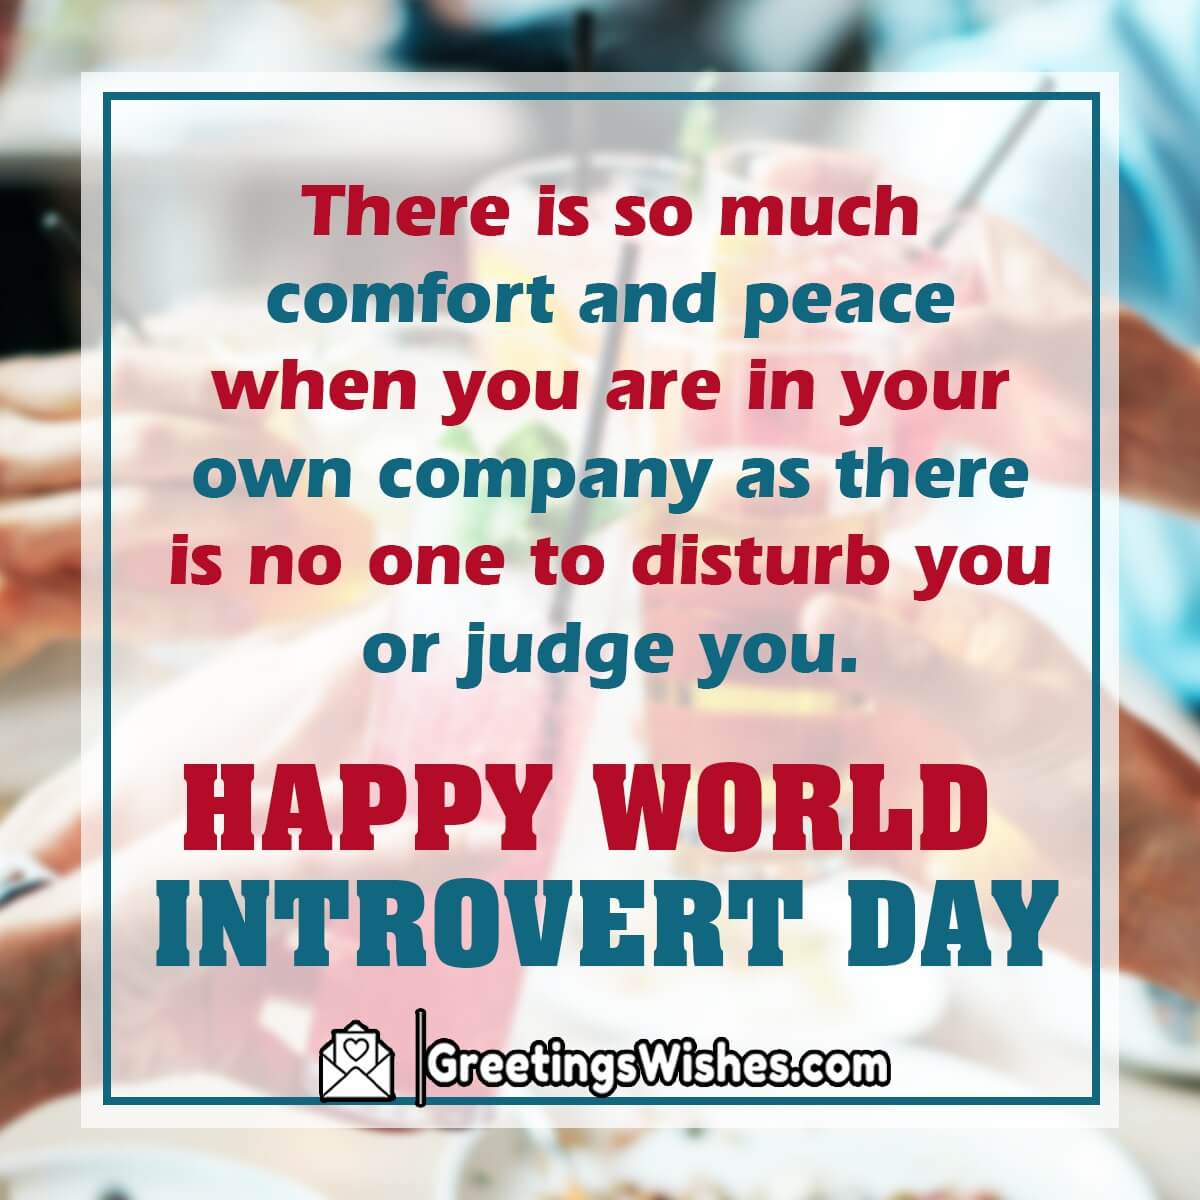 Happy World Introvert Day Message